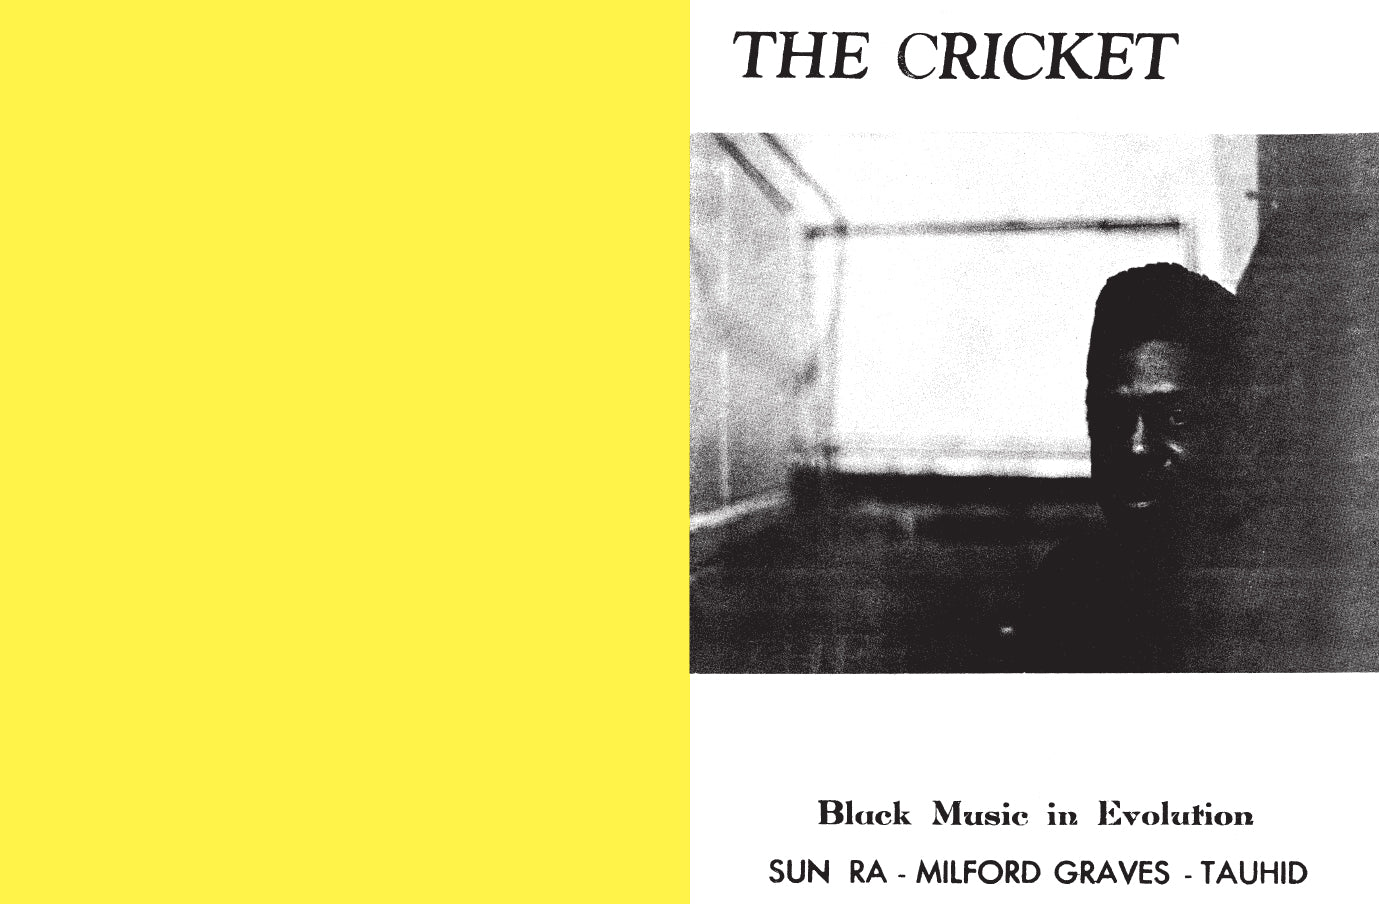 The Cricket – Black Music in Evolution, 1968-69